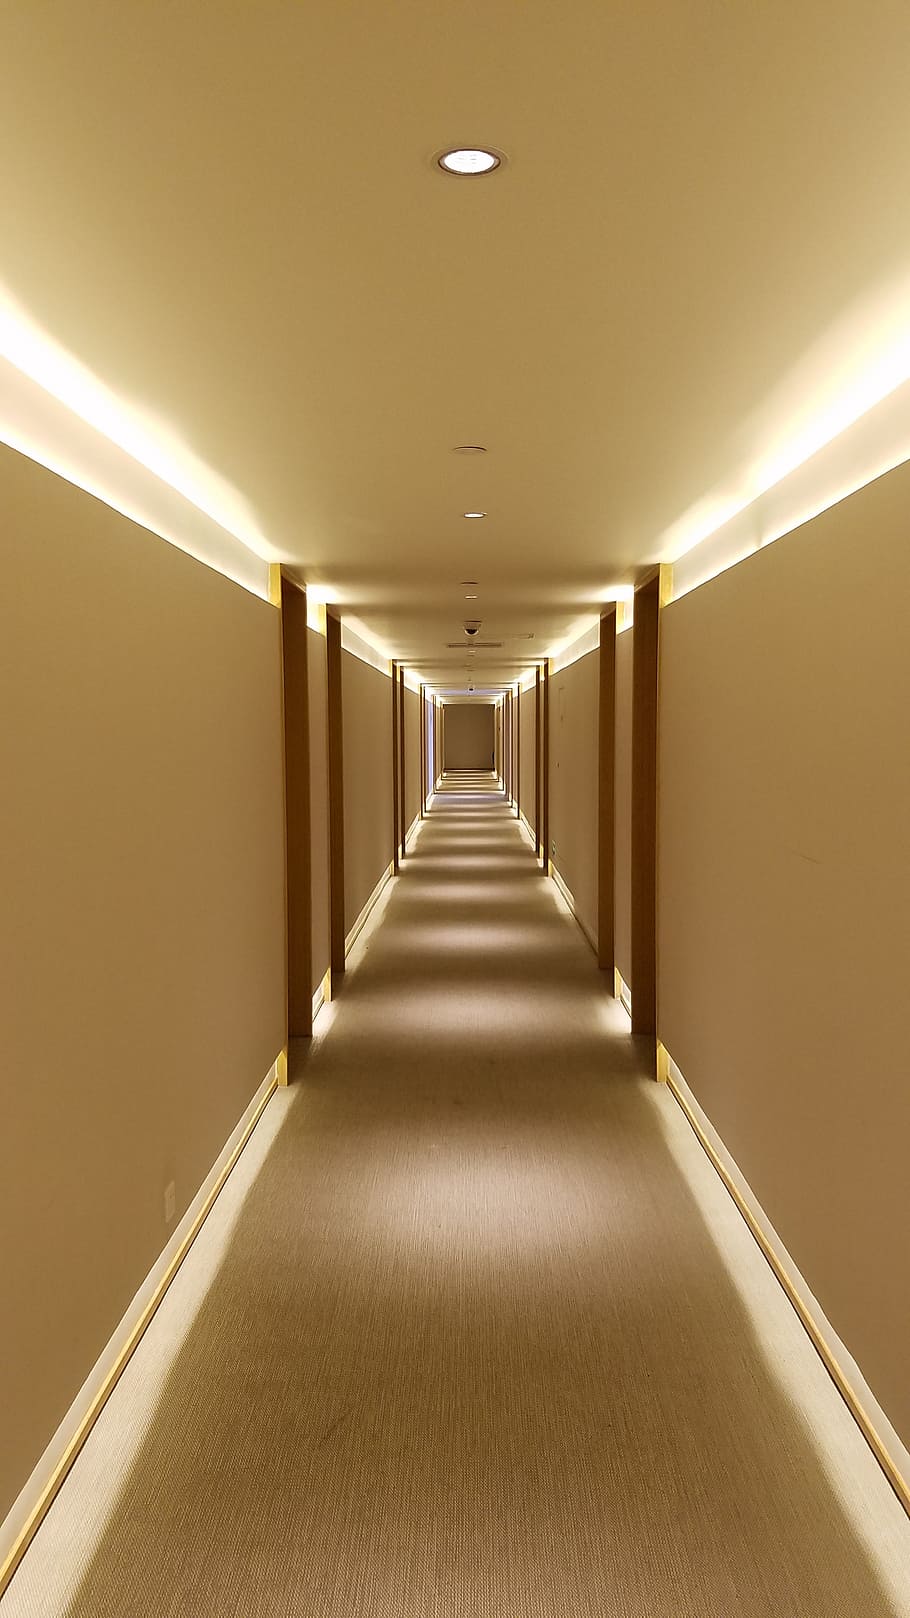 hotel, corridor, carpet, empty, illuminated, the way forward, direction, indoors, architecture, lighting equipment